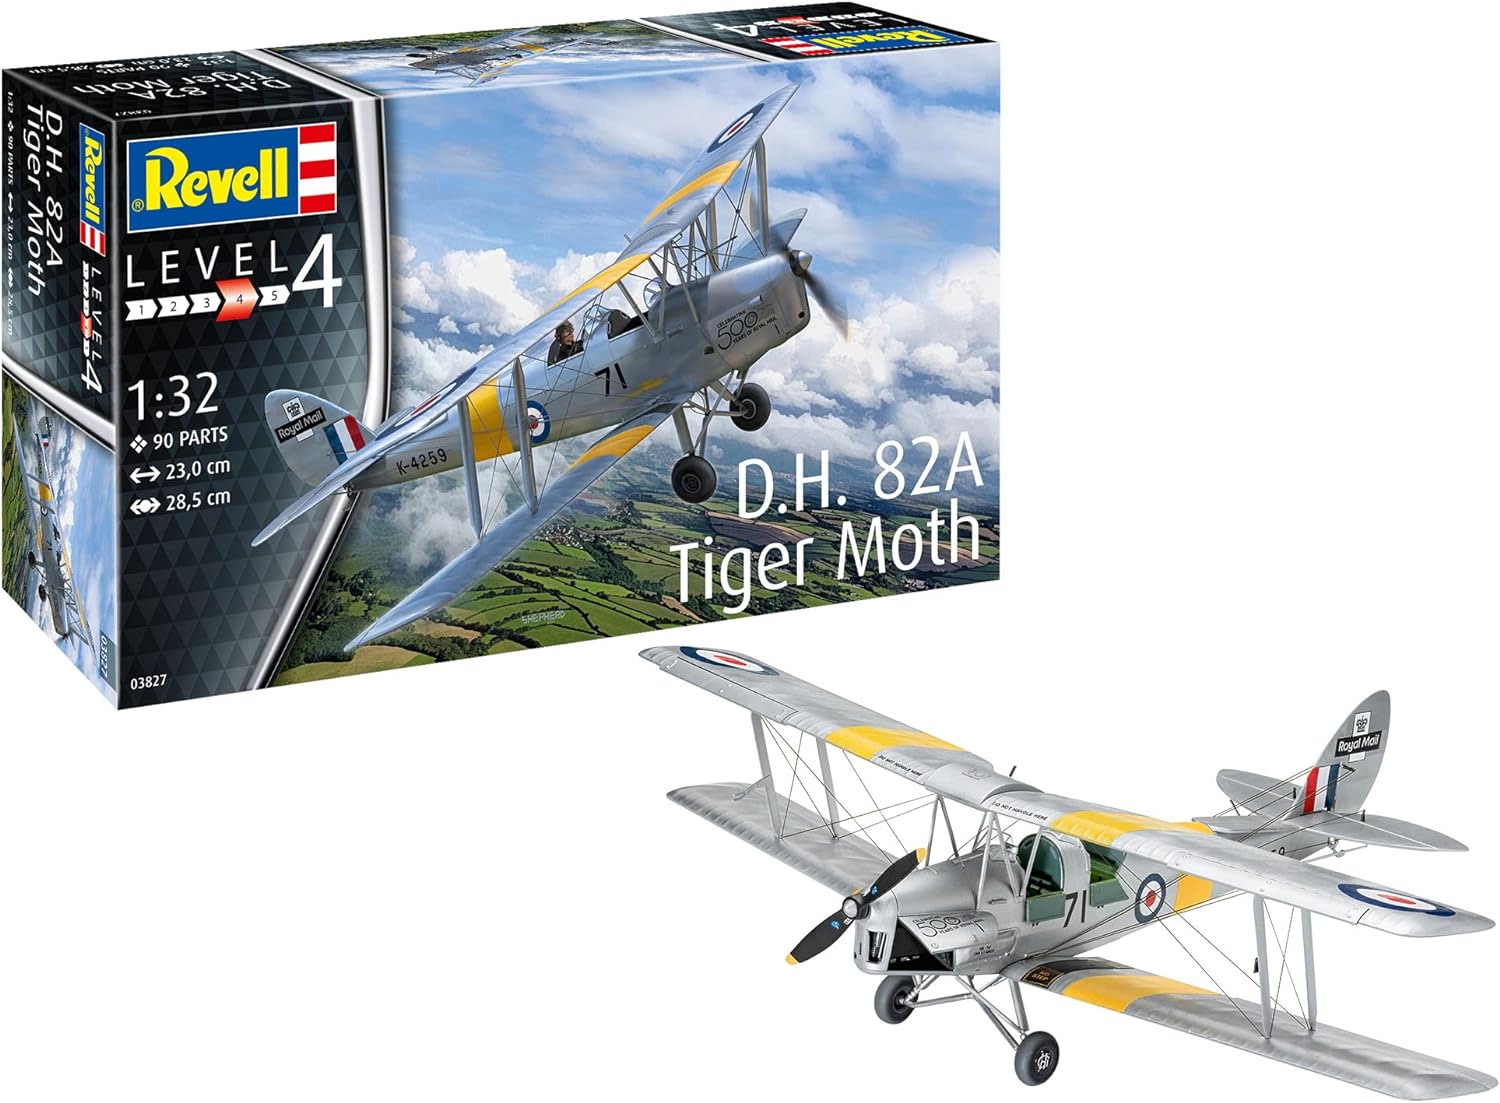 D.H. 82A Tiger Moth 1:32 Scale Kit